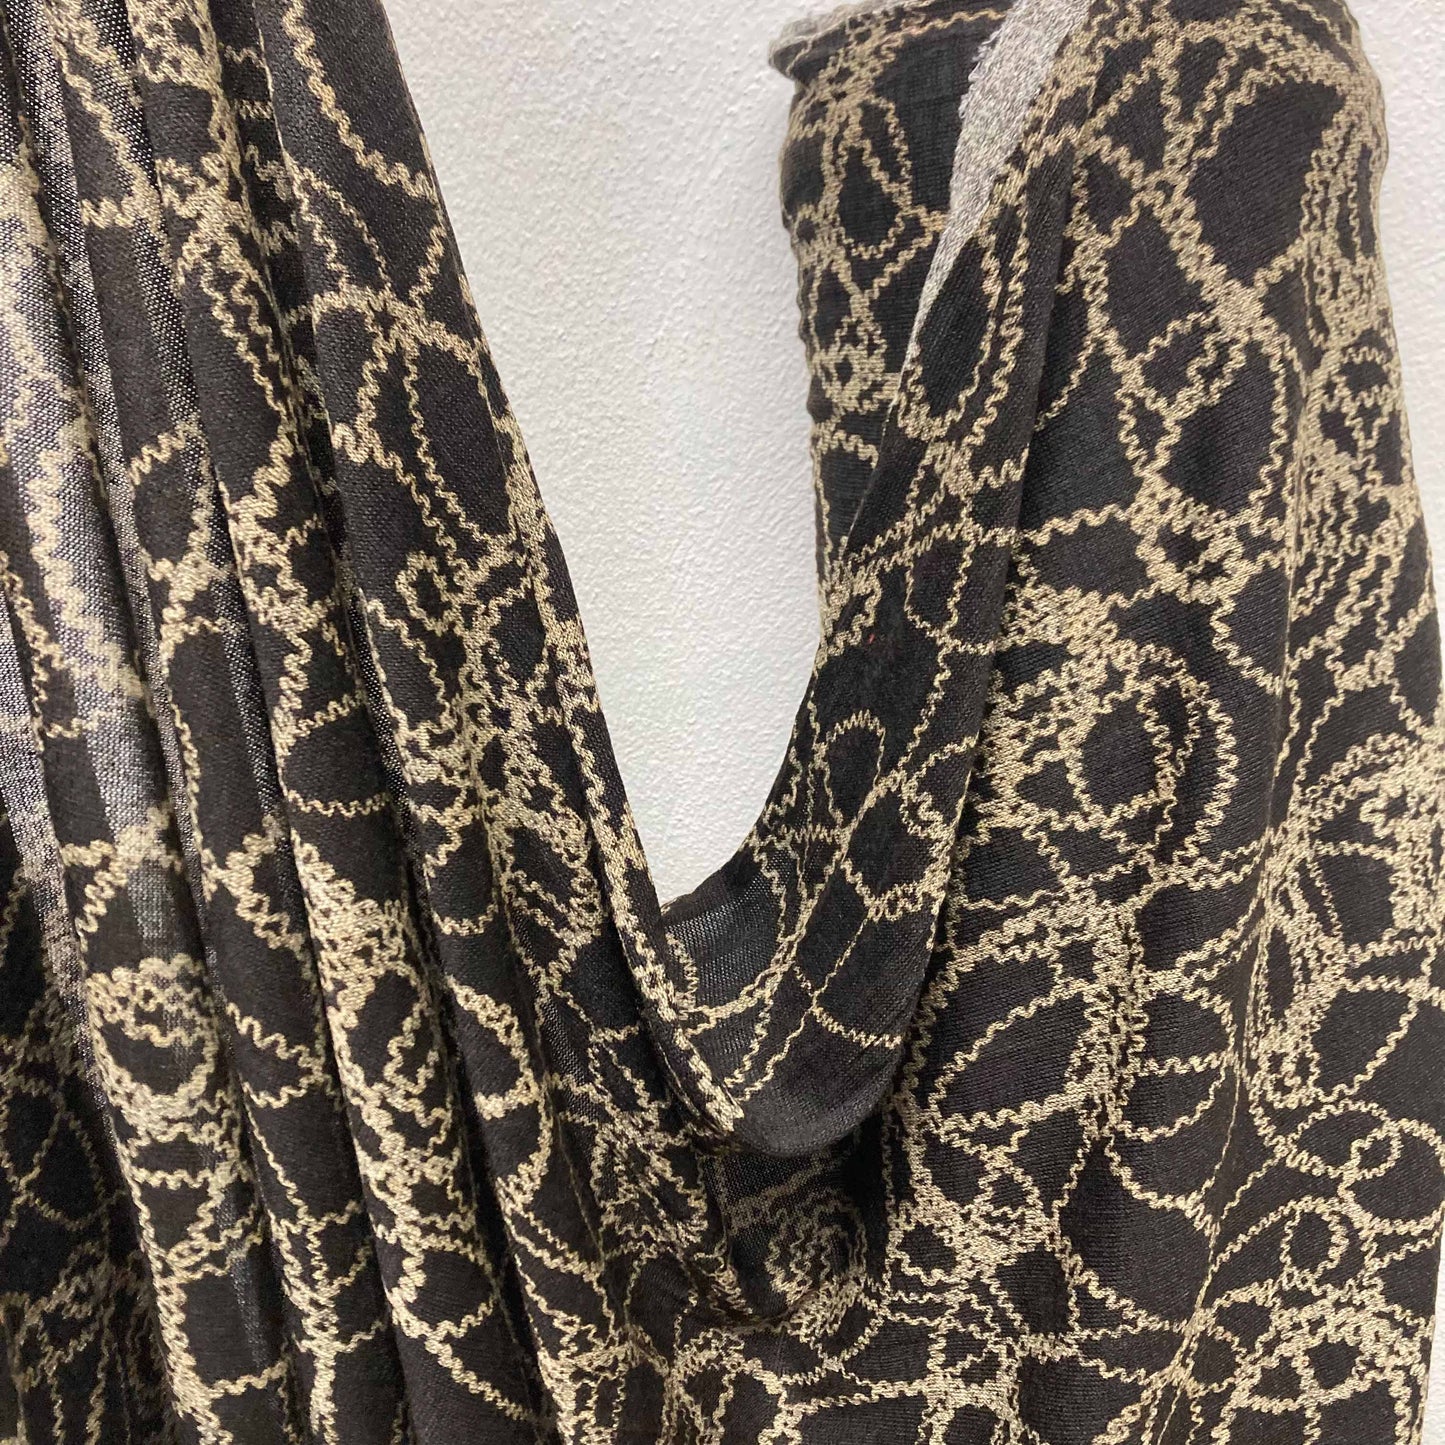 Jersey Fabric - Beige, brown